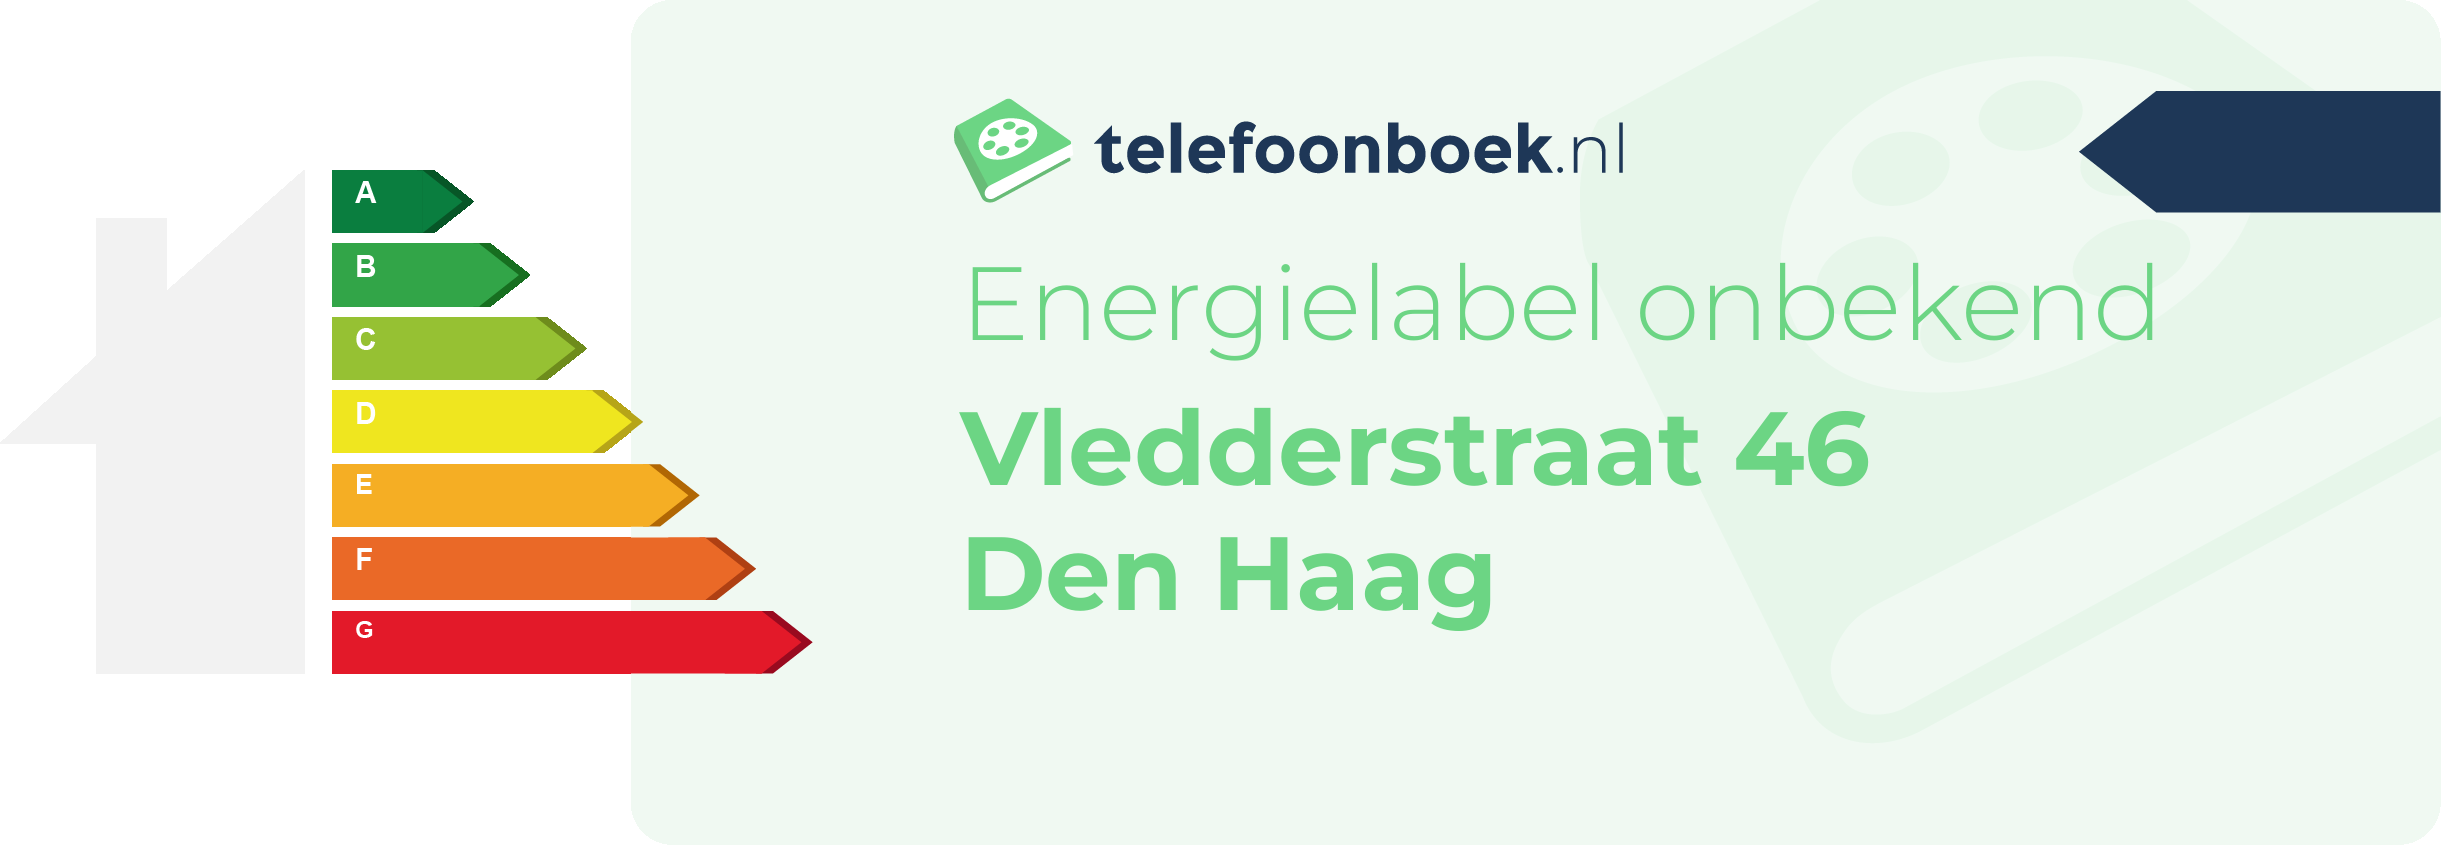 Energielabel Vledderstraat 46 Den Haag